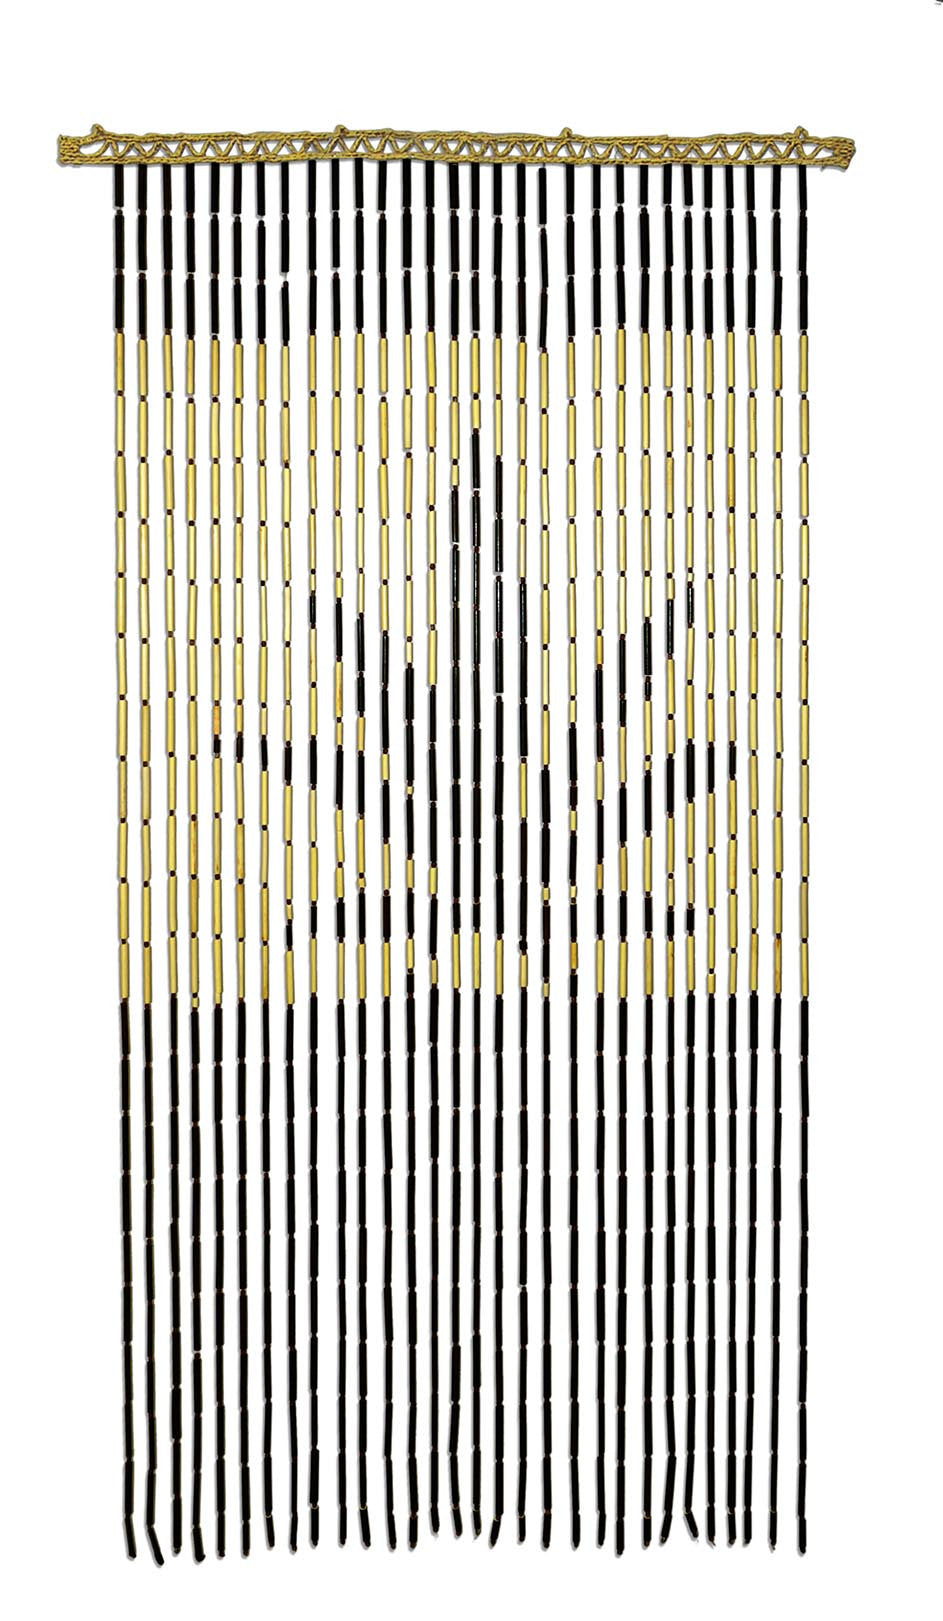 bamboo curtain - Pot Leaf